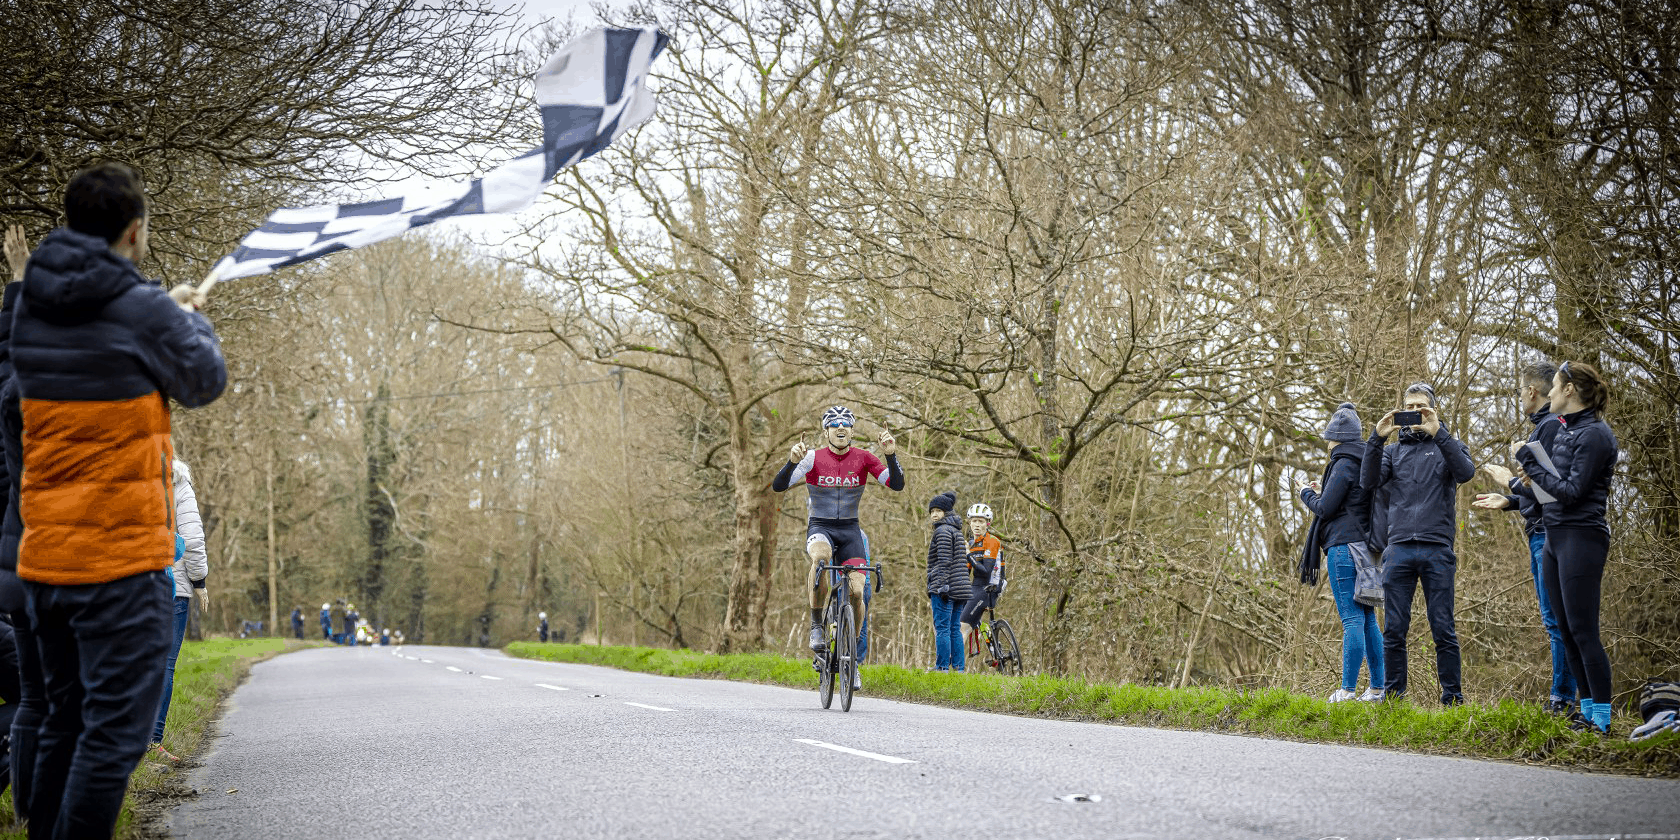 Cyclist crossing finish line